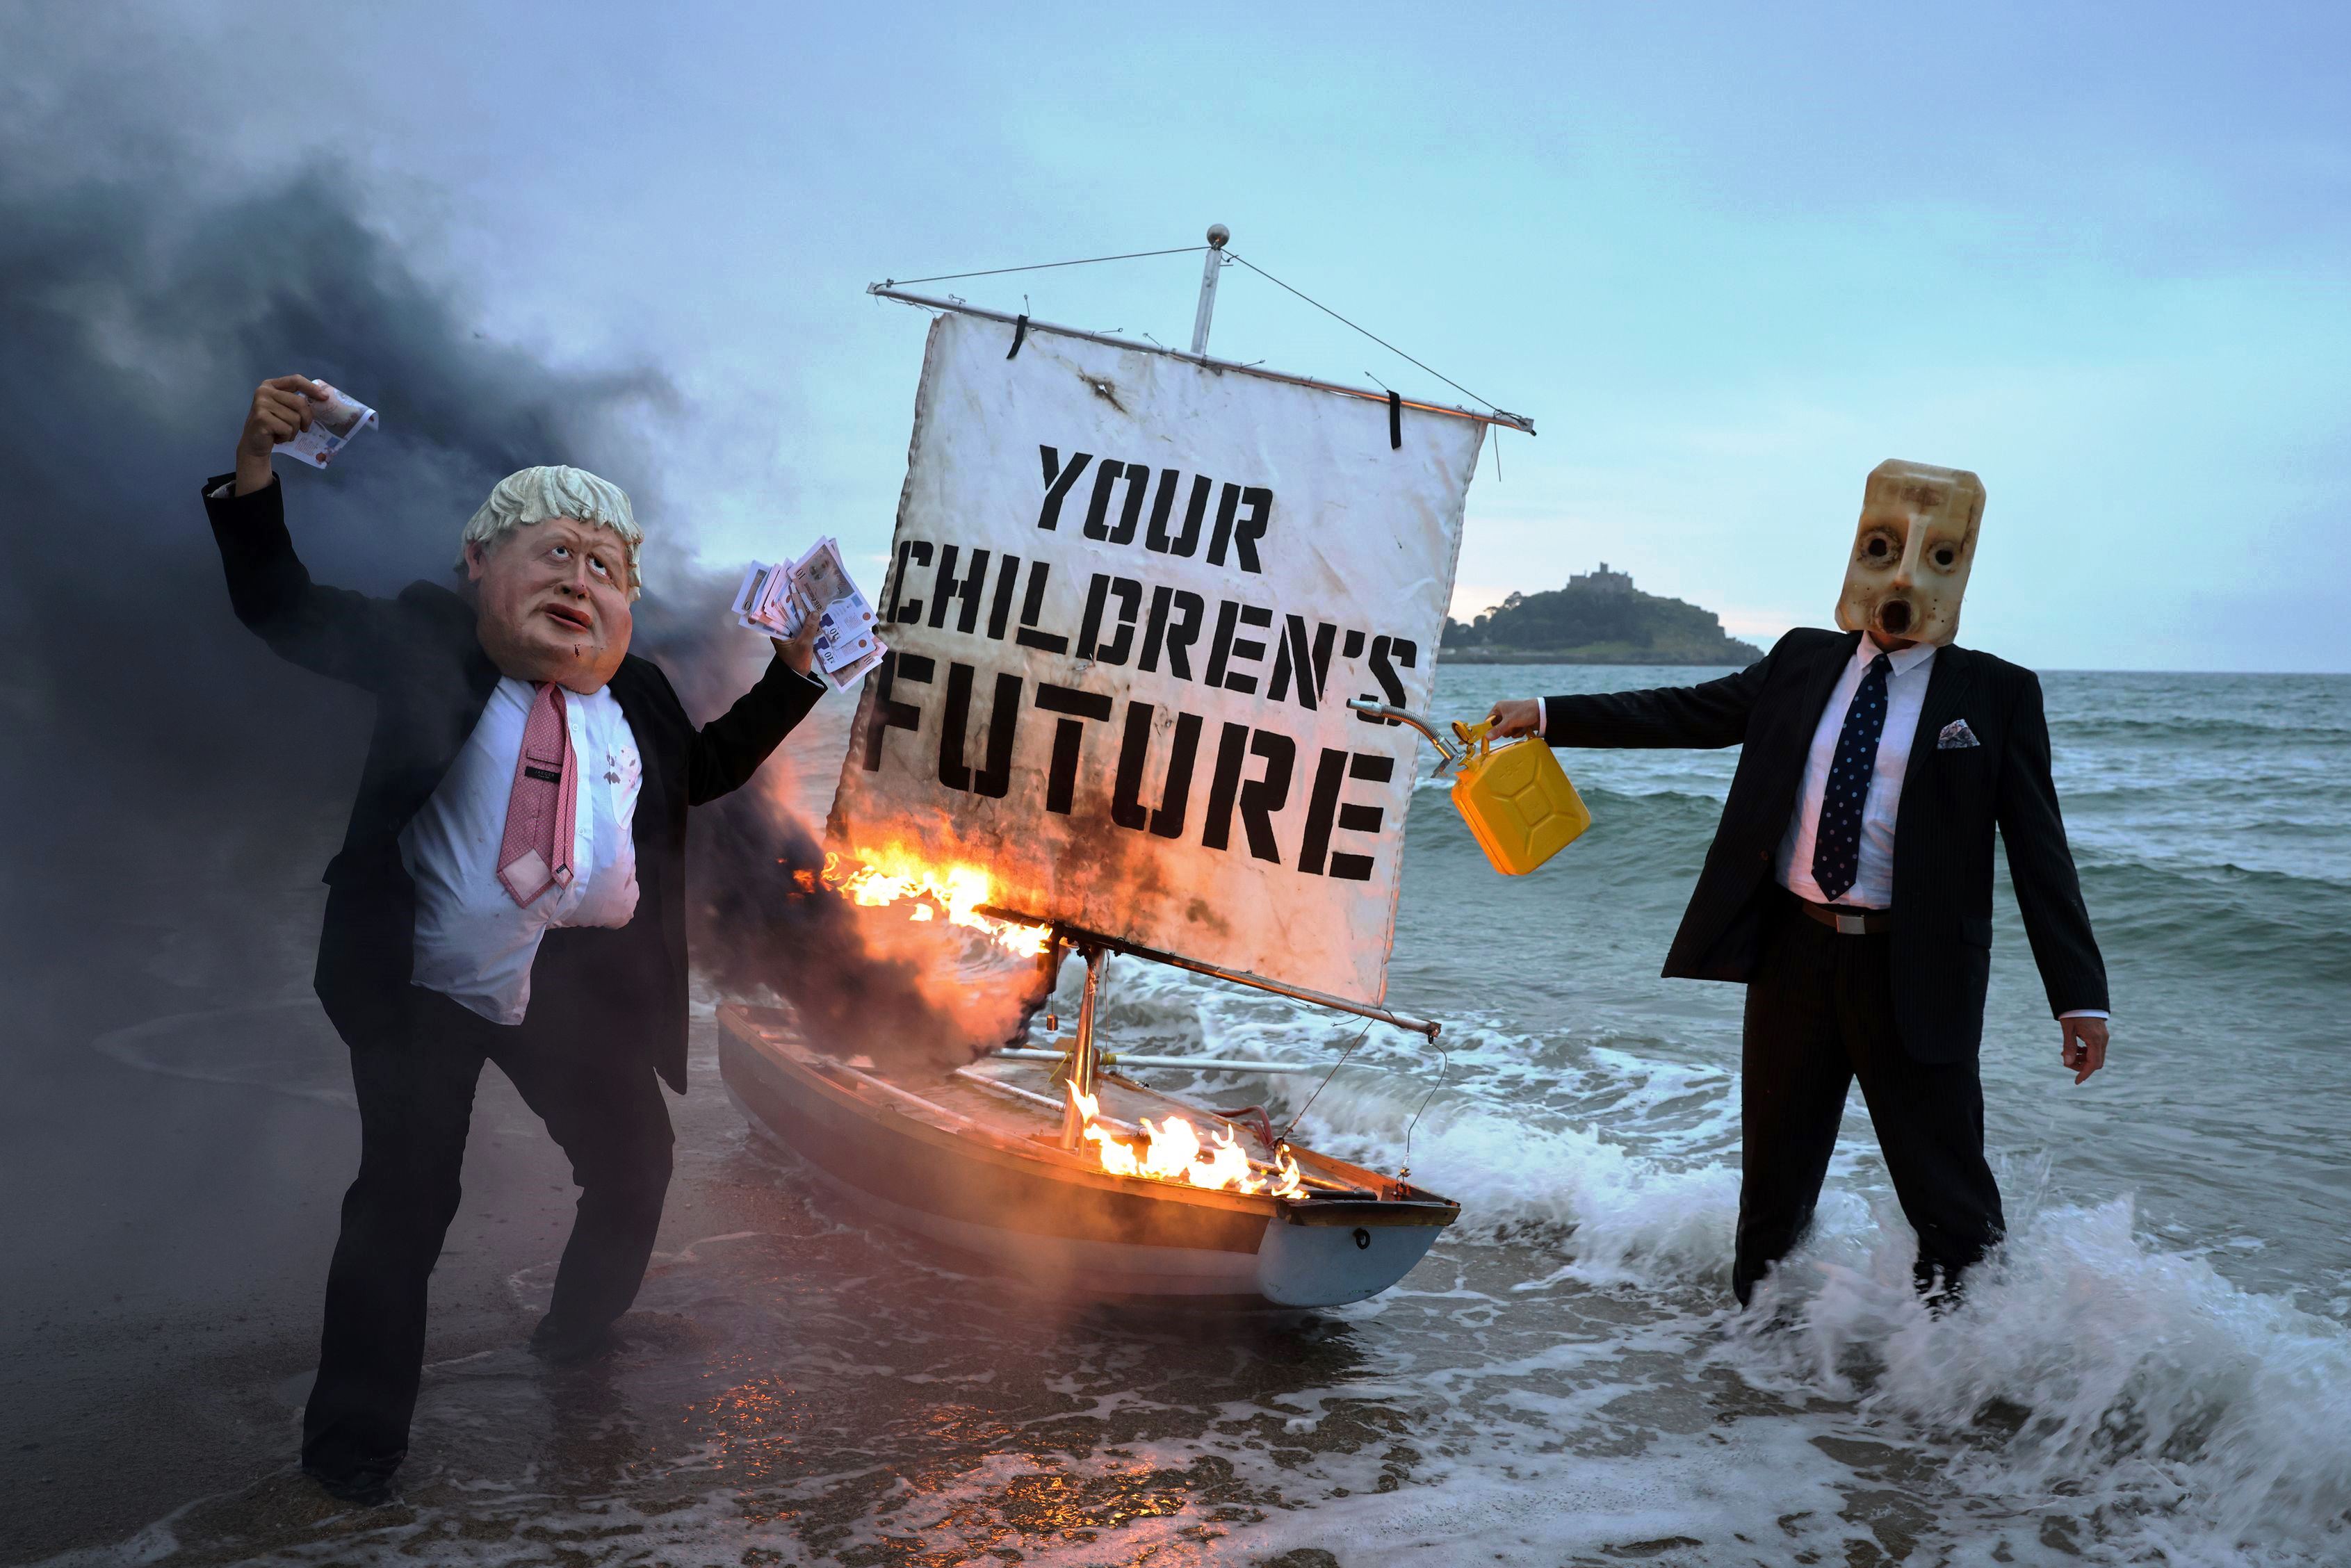 G7 Boris burns boat on beach - enlarge